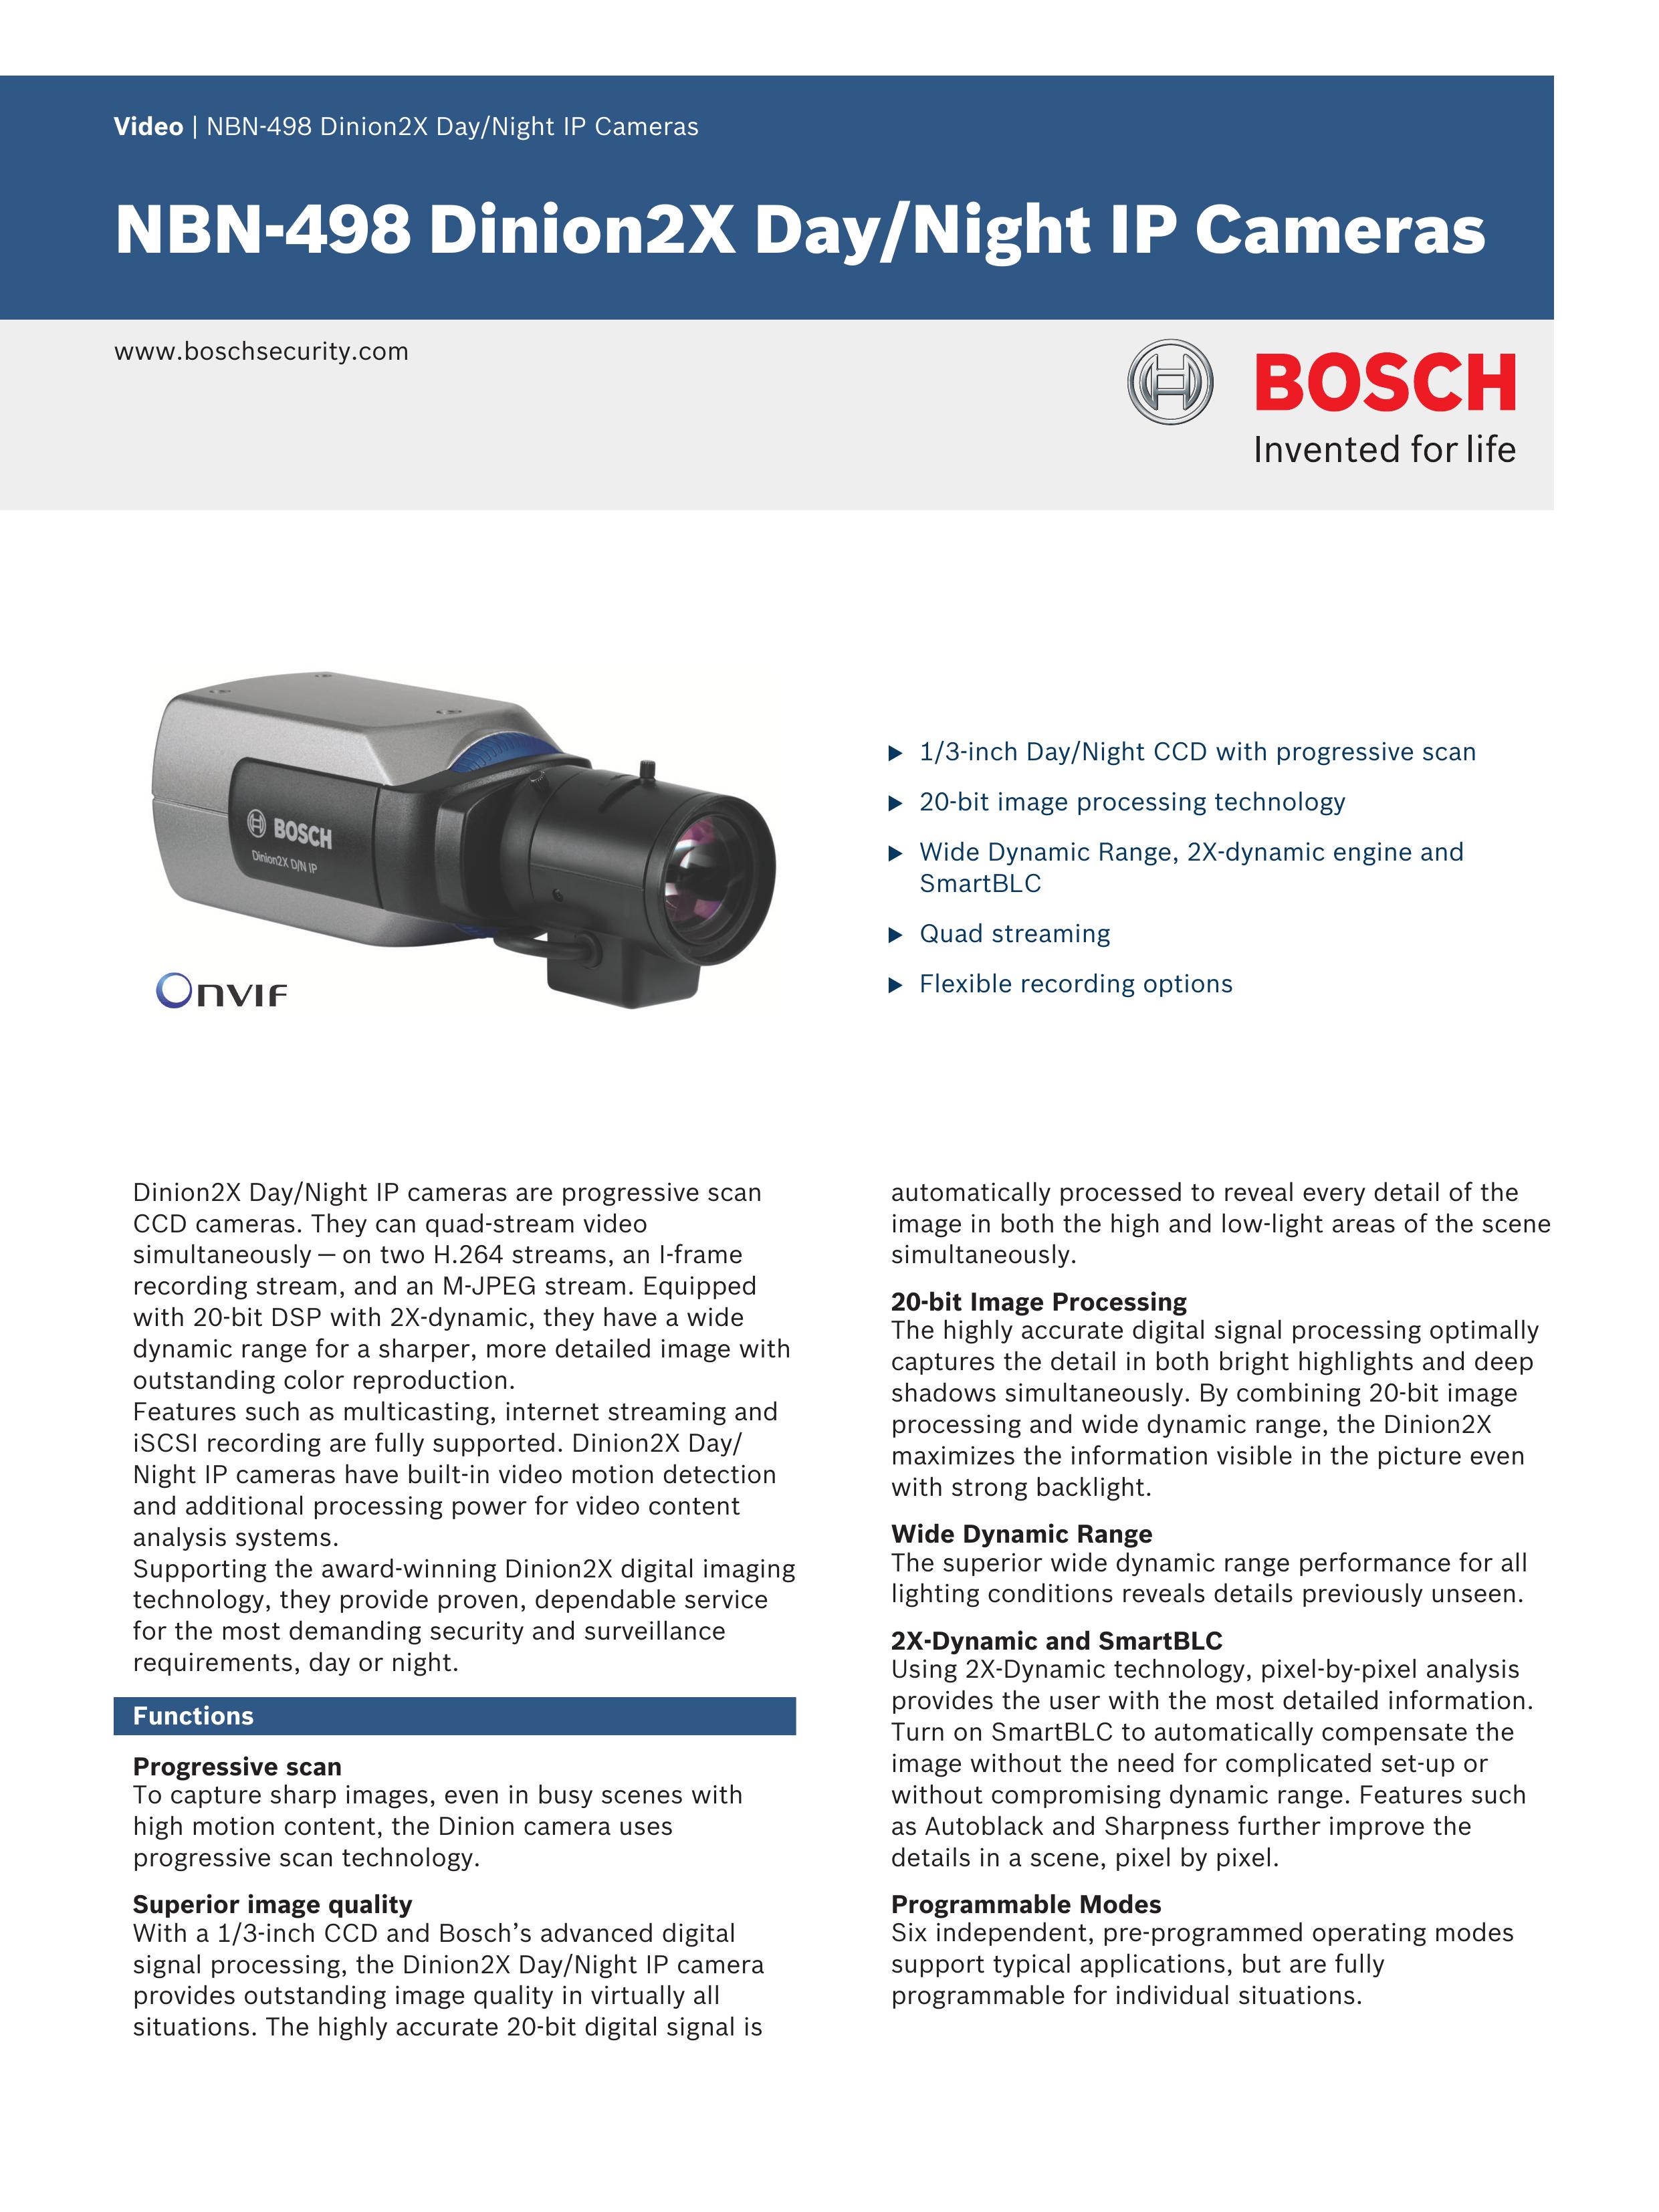 Bosch Appliances NBN-498 Security Camera User Manual